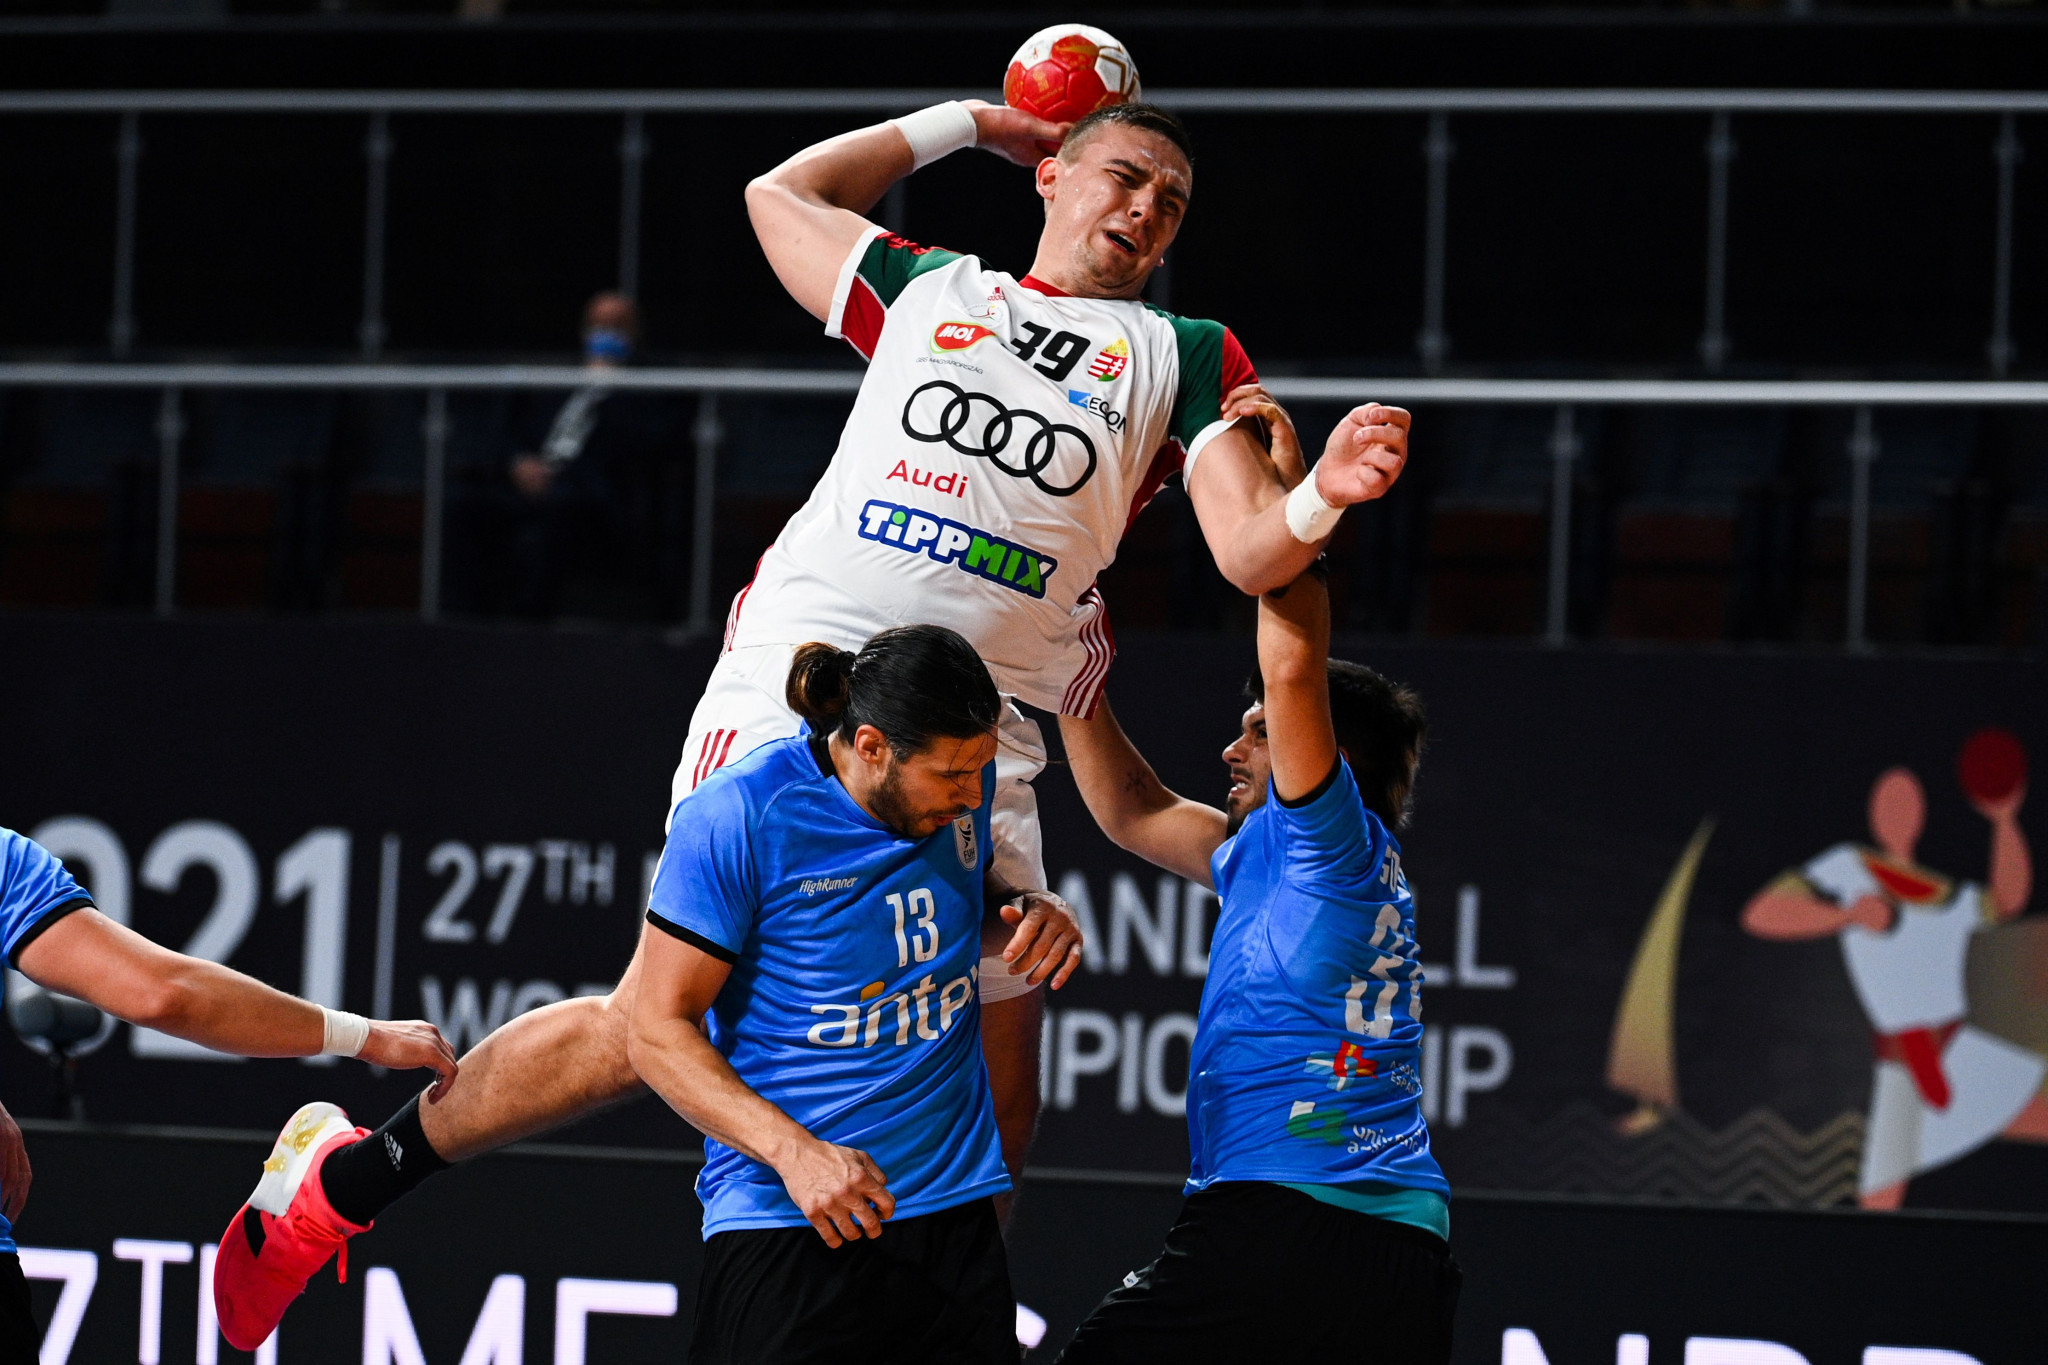 Hungary among teams to reach main round of IHF Men’s Handball World Championship after big win over Uruguay